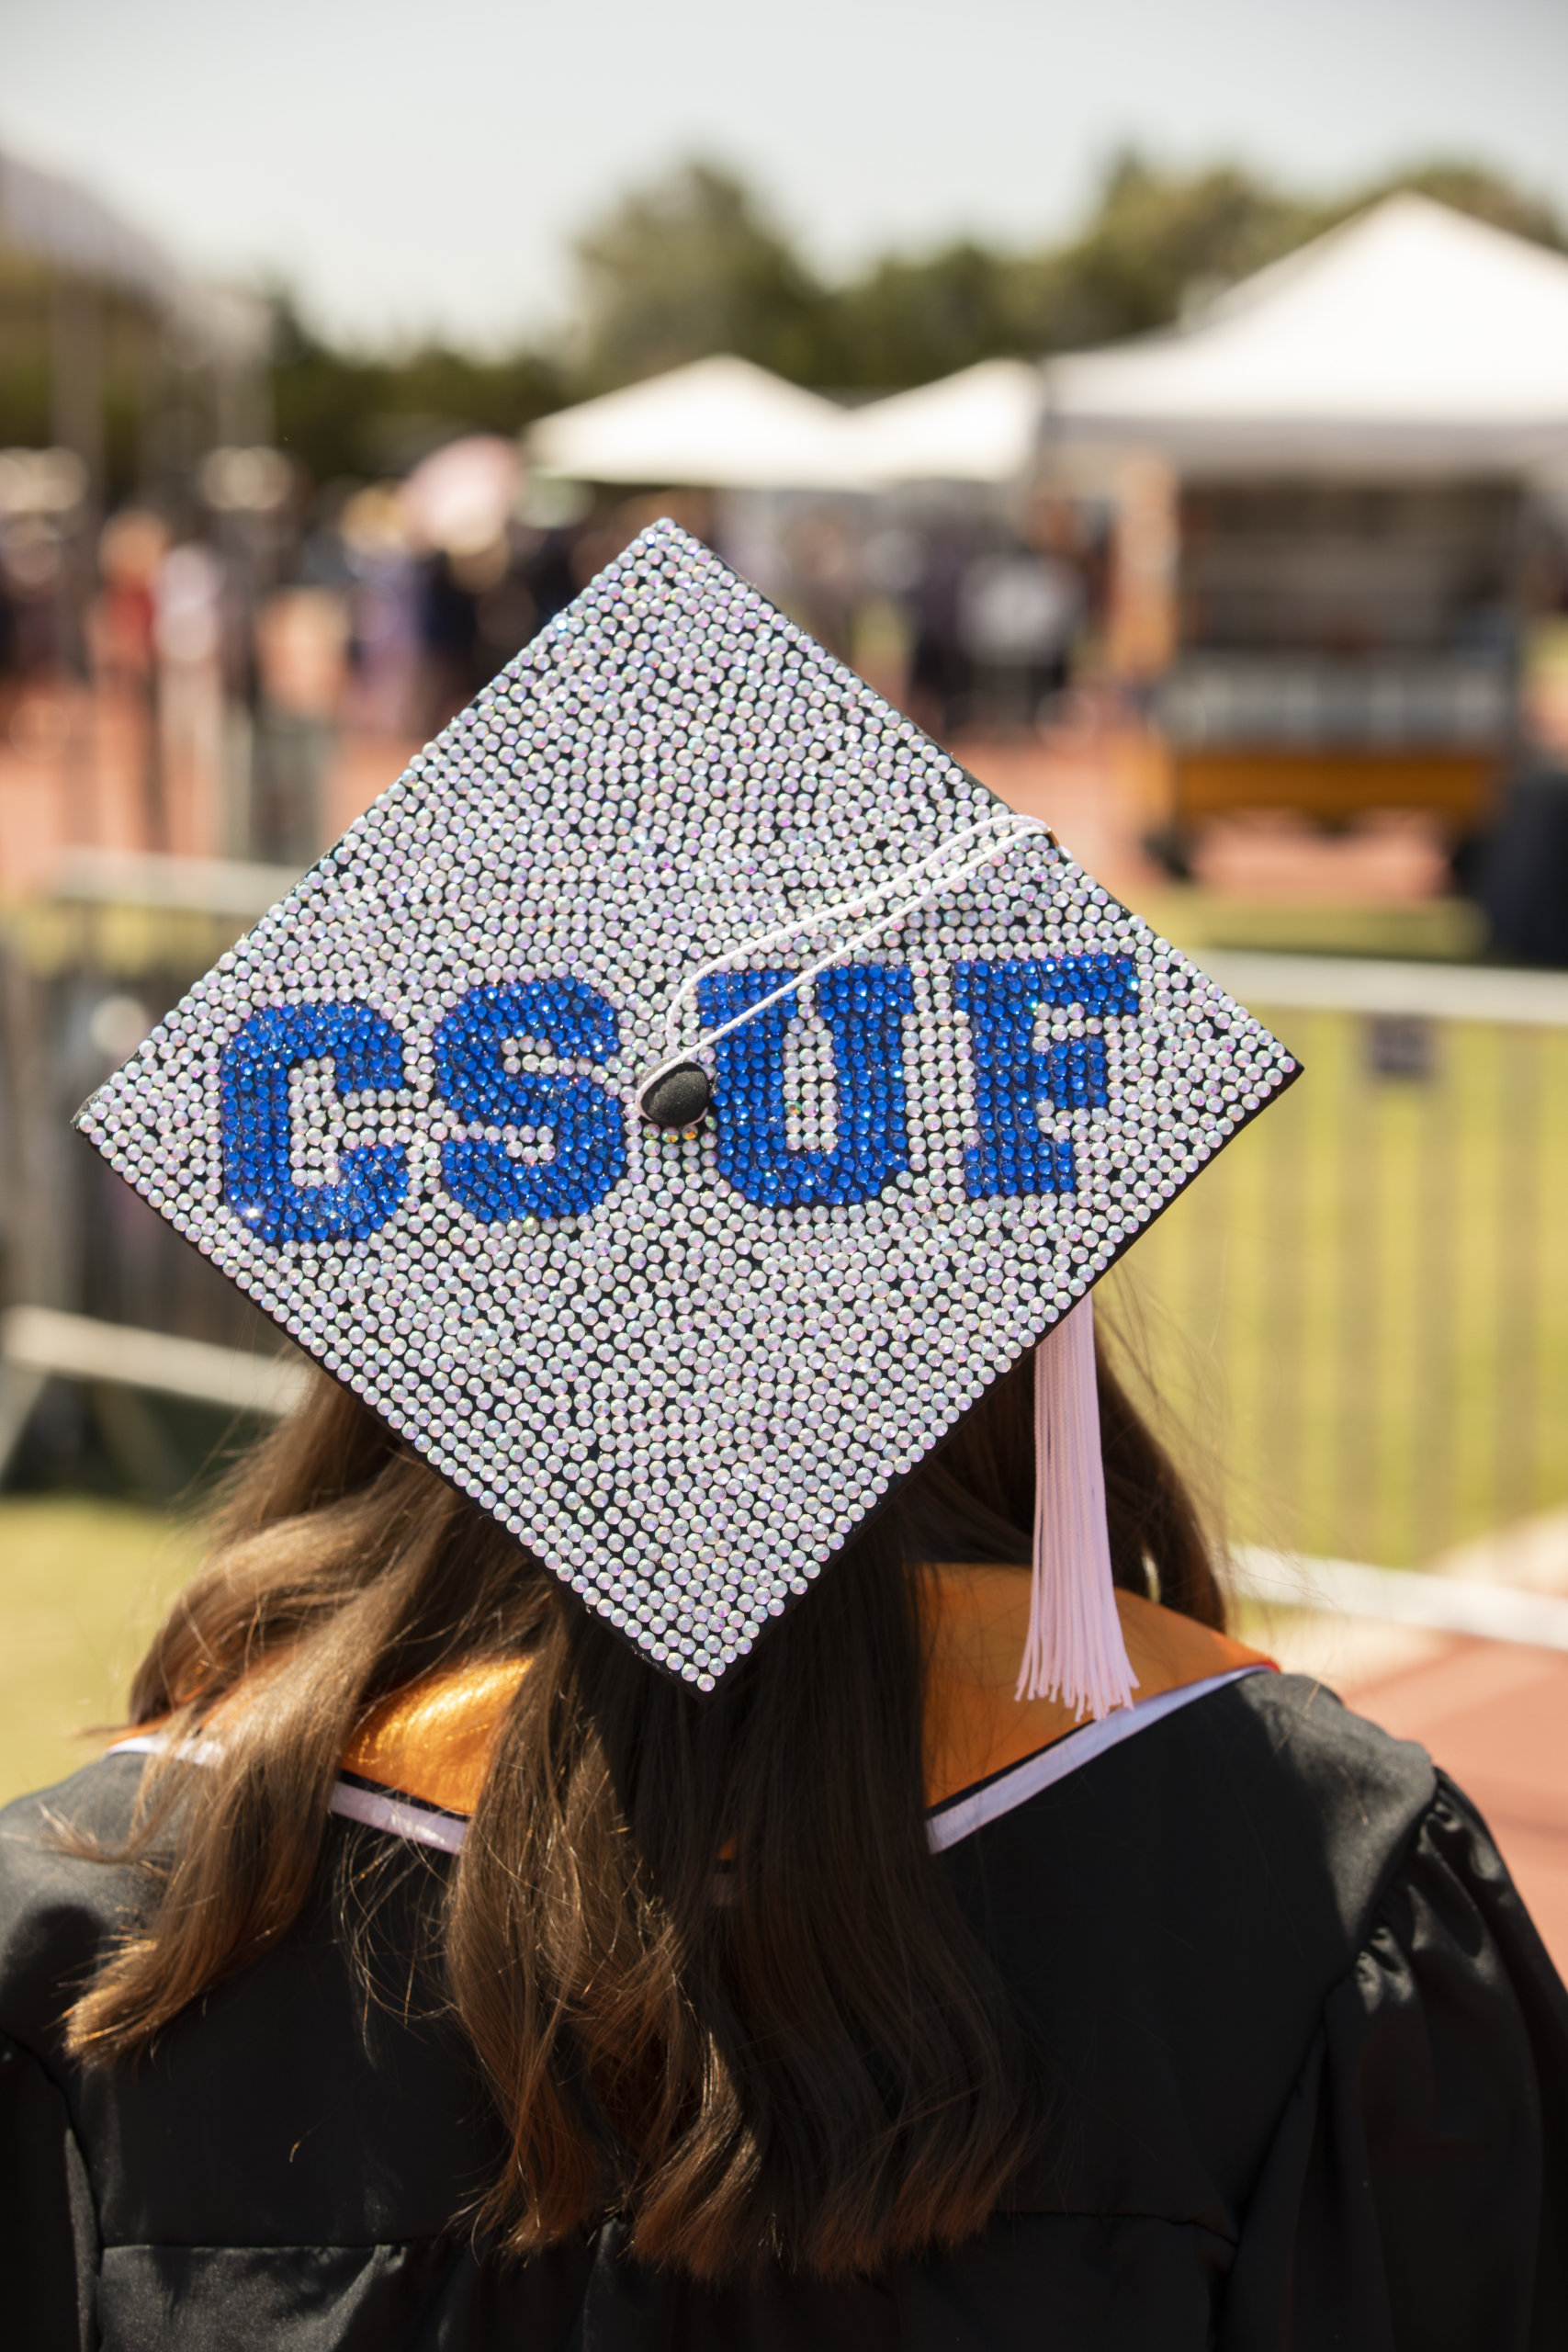 Bedazzled grad cap reads "CSUF" in